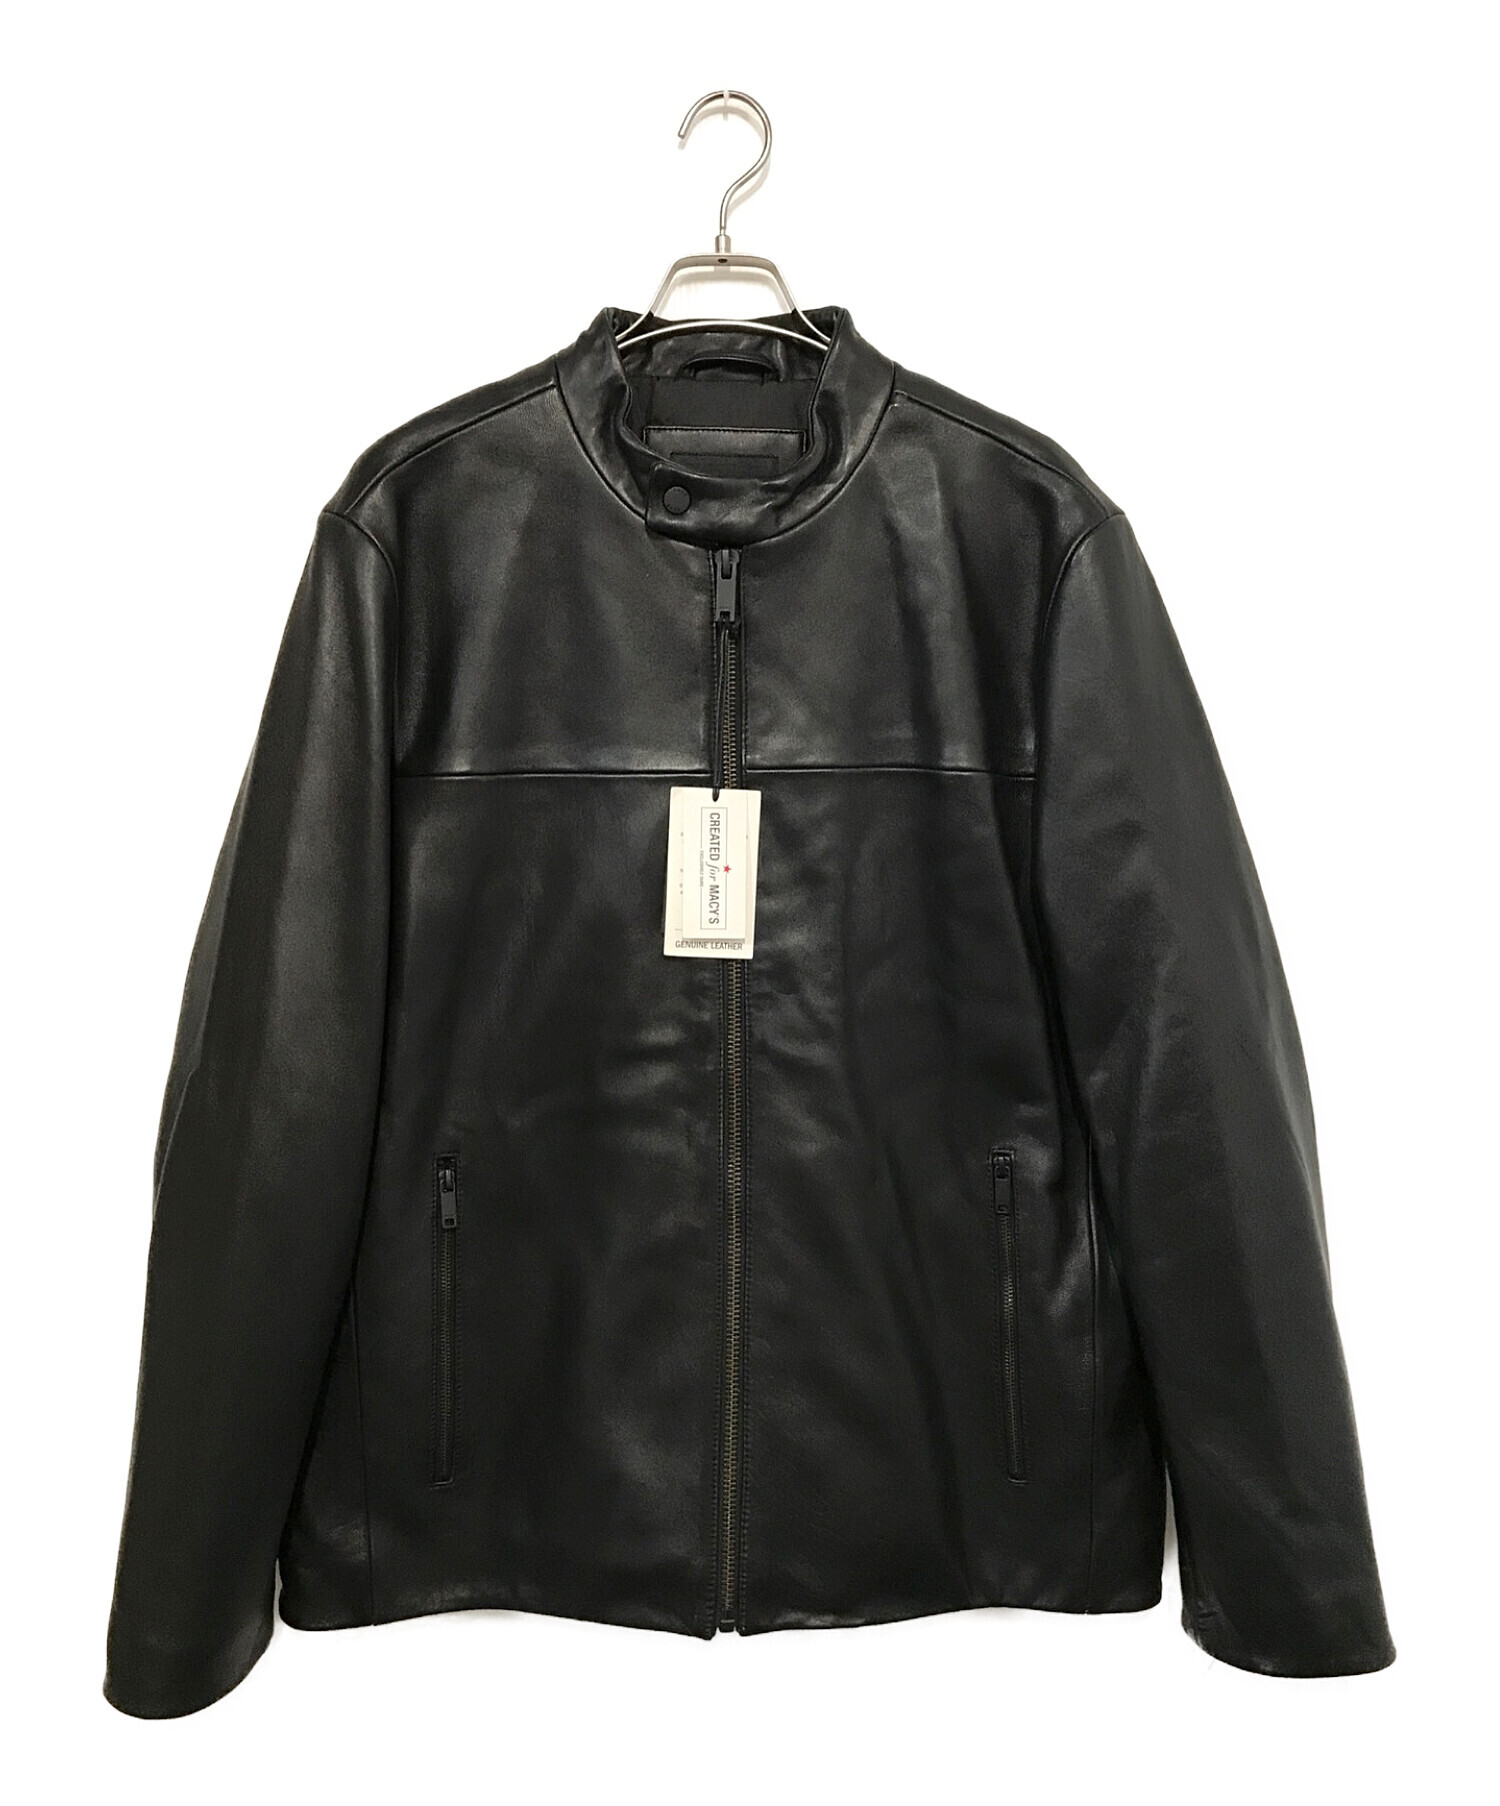 DKNY (ダナキャランニューヨーク) シングルライダースジャケット ブラック サイズ:Ⅼ